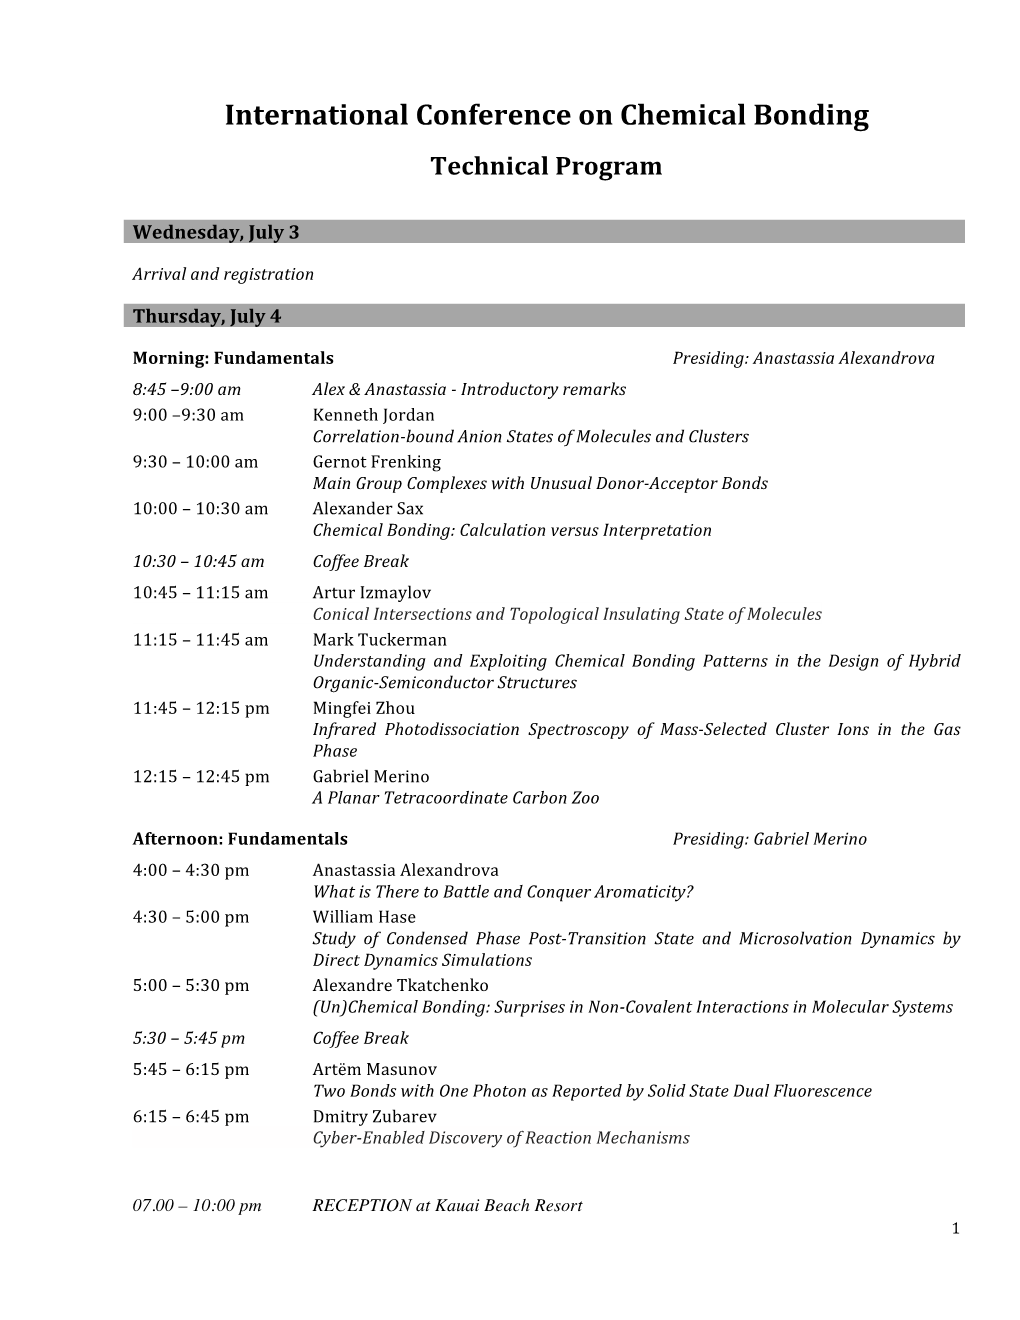 International Conference on Chemical Bonding Technical Program